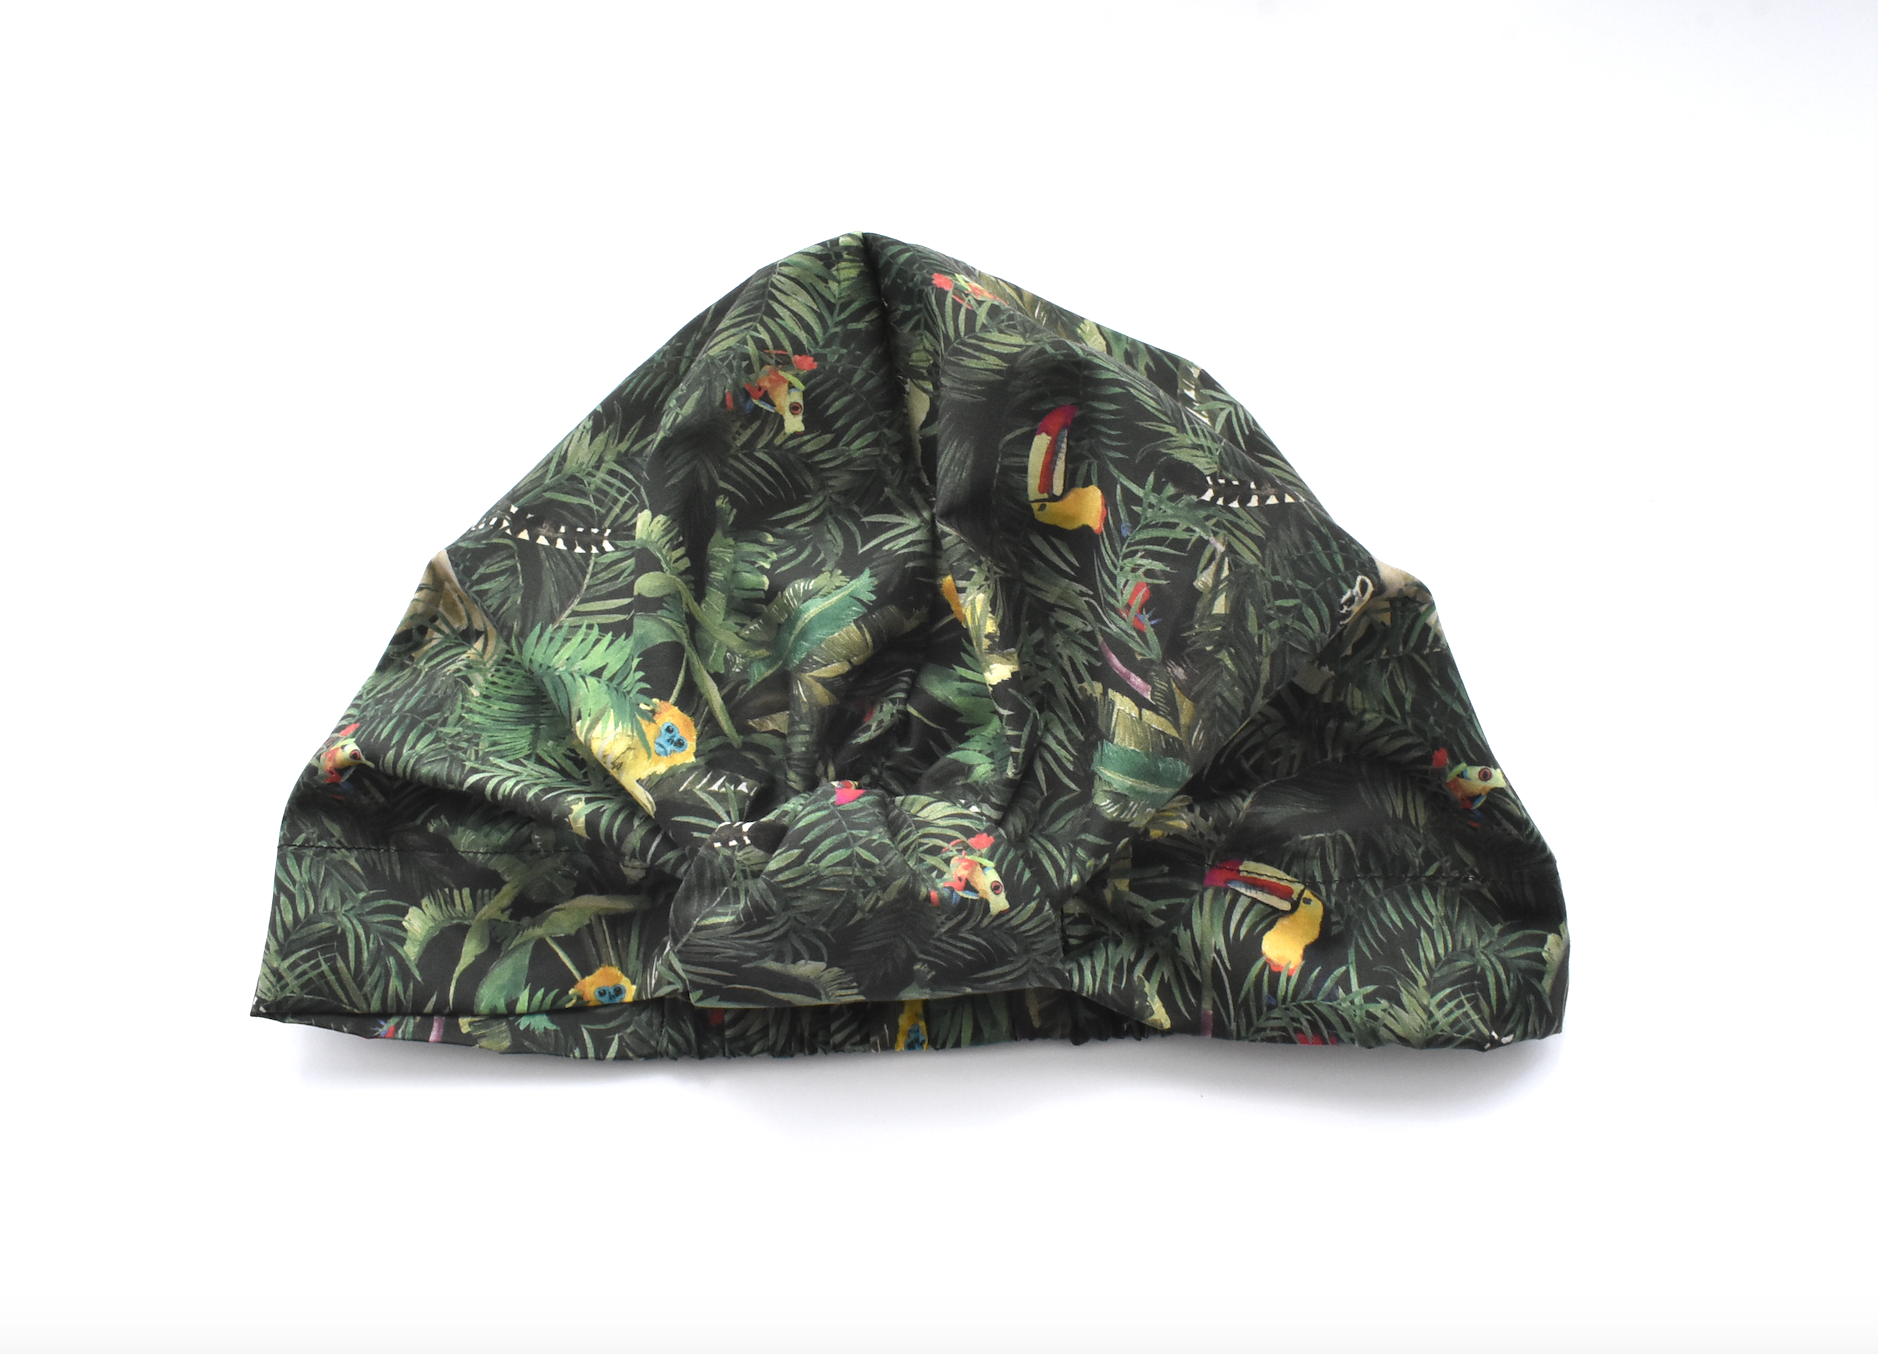 Salty Sea Knot - Swimming Cap Topper - Swim Turban - Green Tou-Can Hide Jungle print